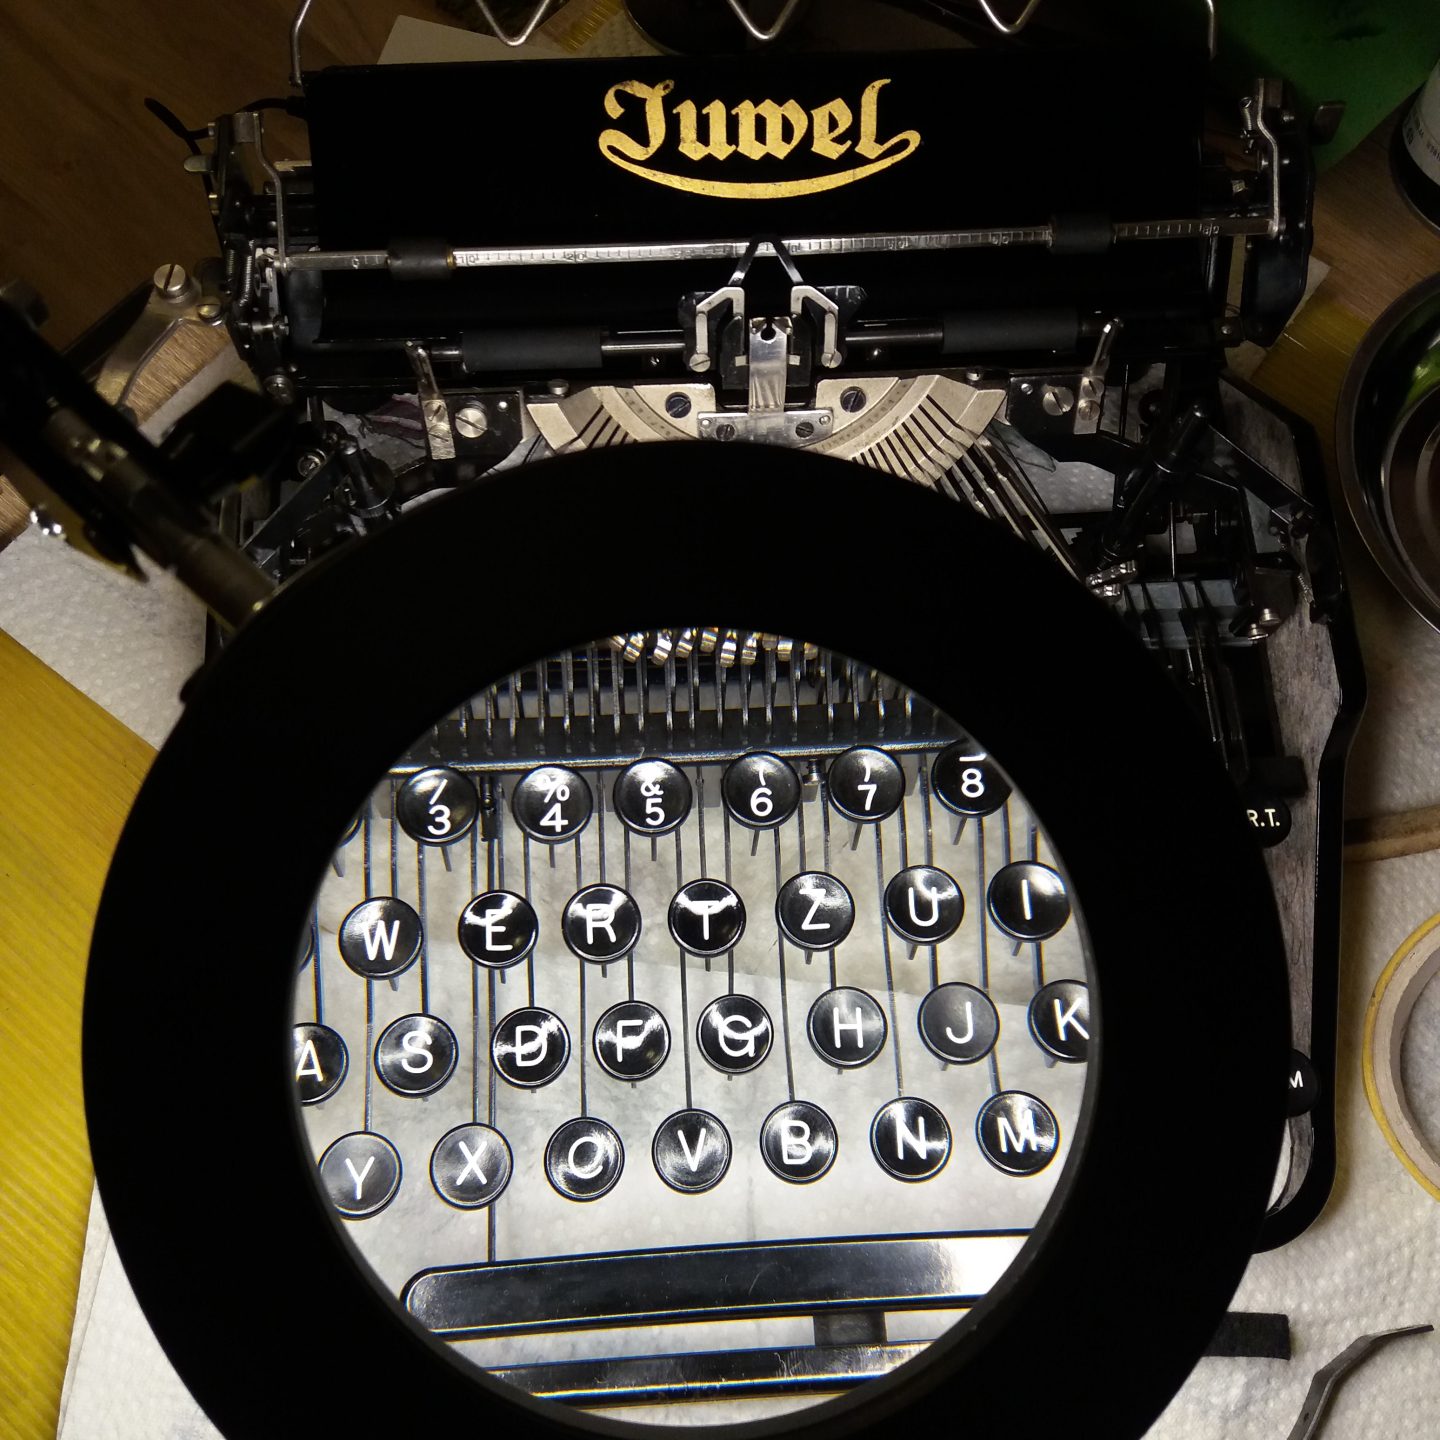 Juwel Modell 3, and 4 – The Wednesday typewriter